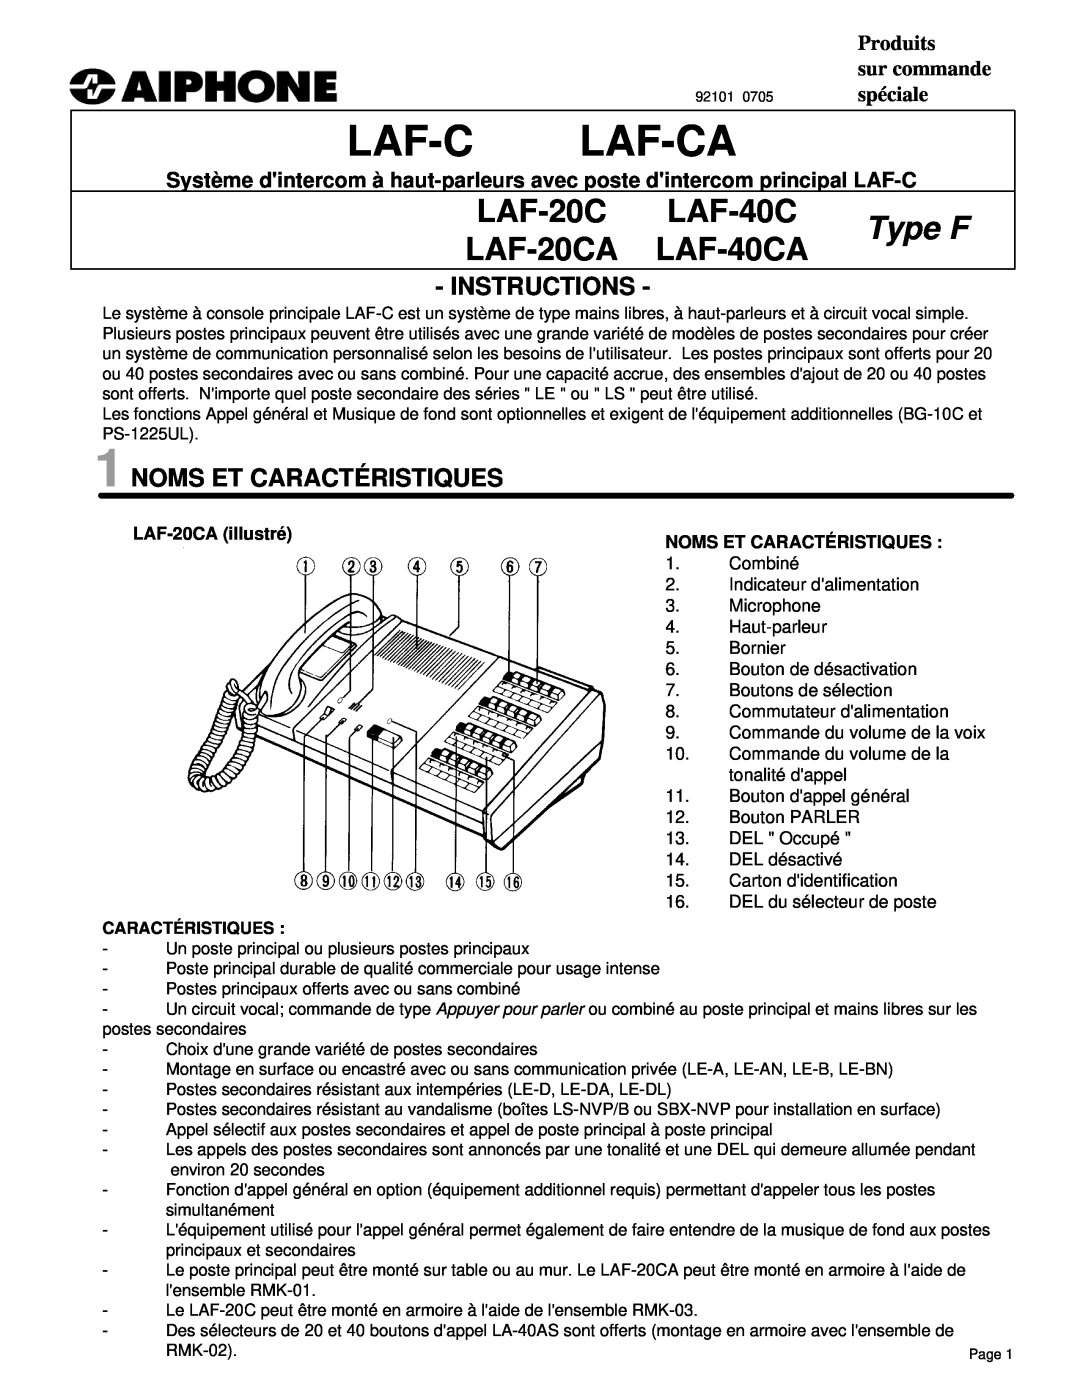 Aiphone LAF-C manual Instructions, Noms Et Caractéristiques, Laf-C Laf-Ca, LAF-20C LAF-40C, LAF-20CA LAF-40CA, Type F 